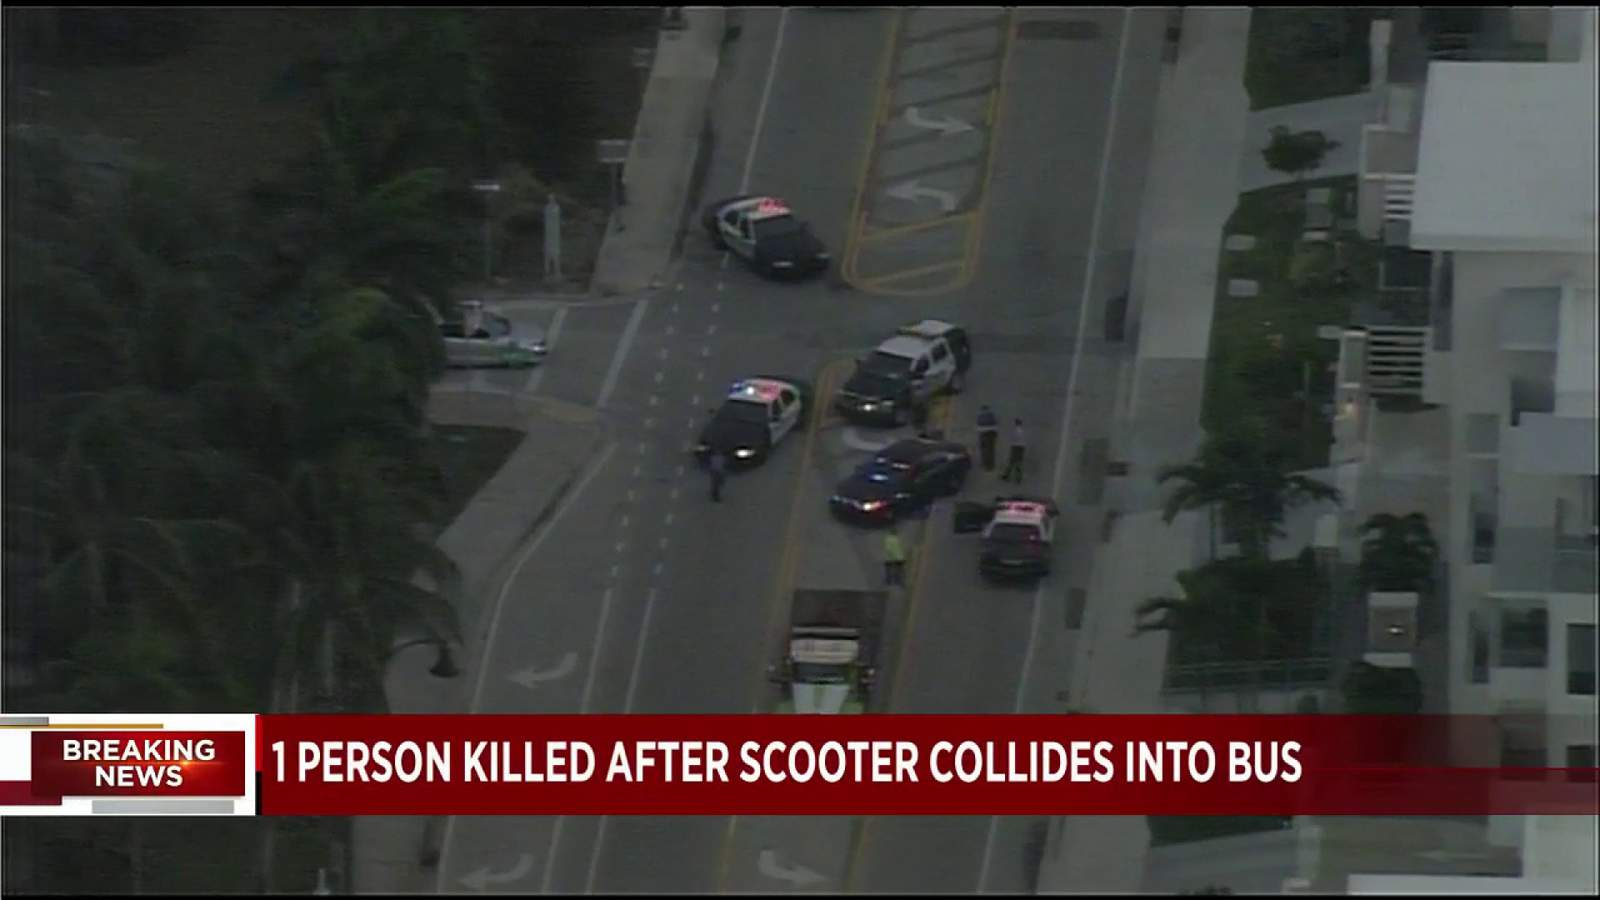 Images capture aftermath of scooter, bus crash